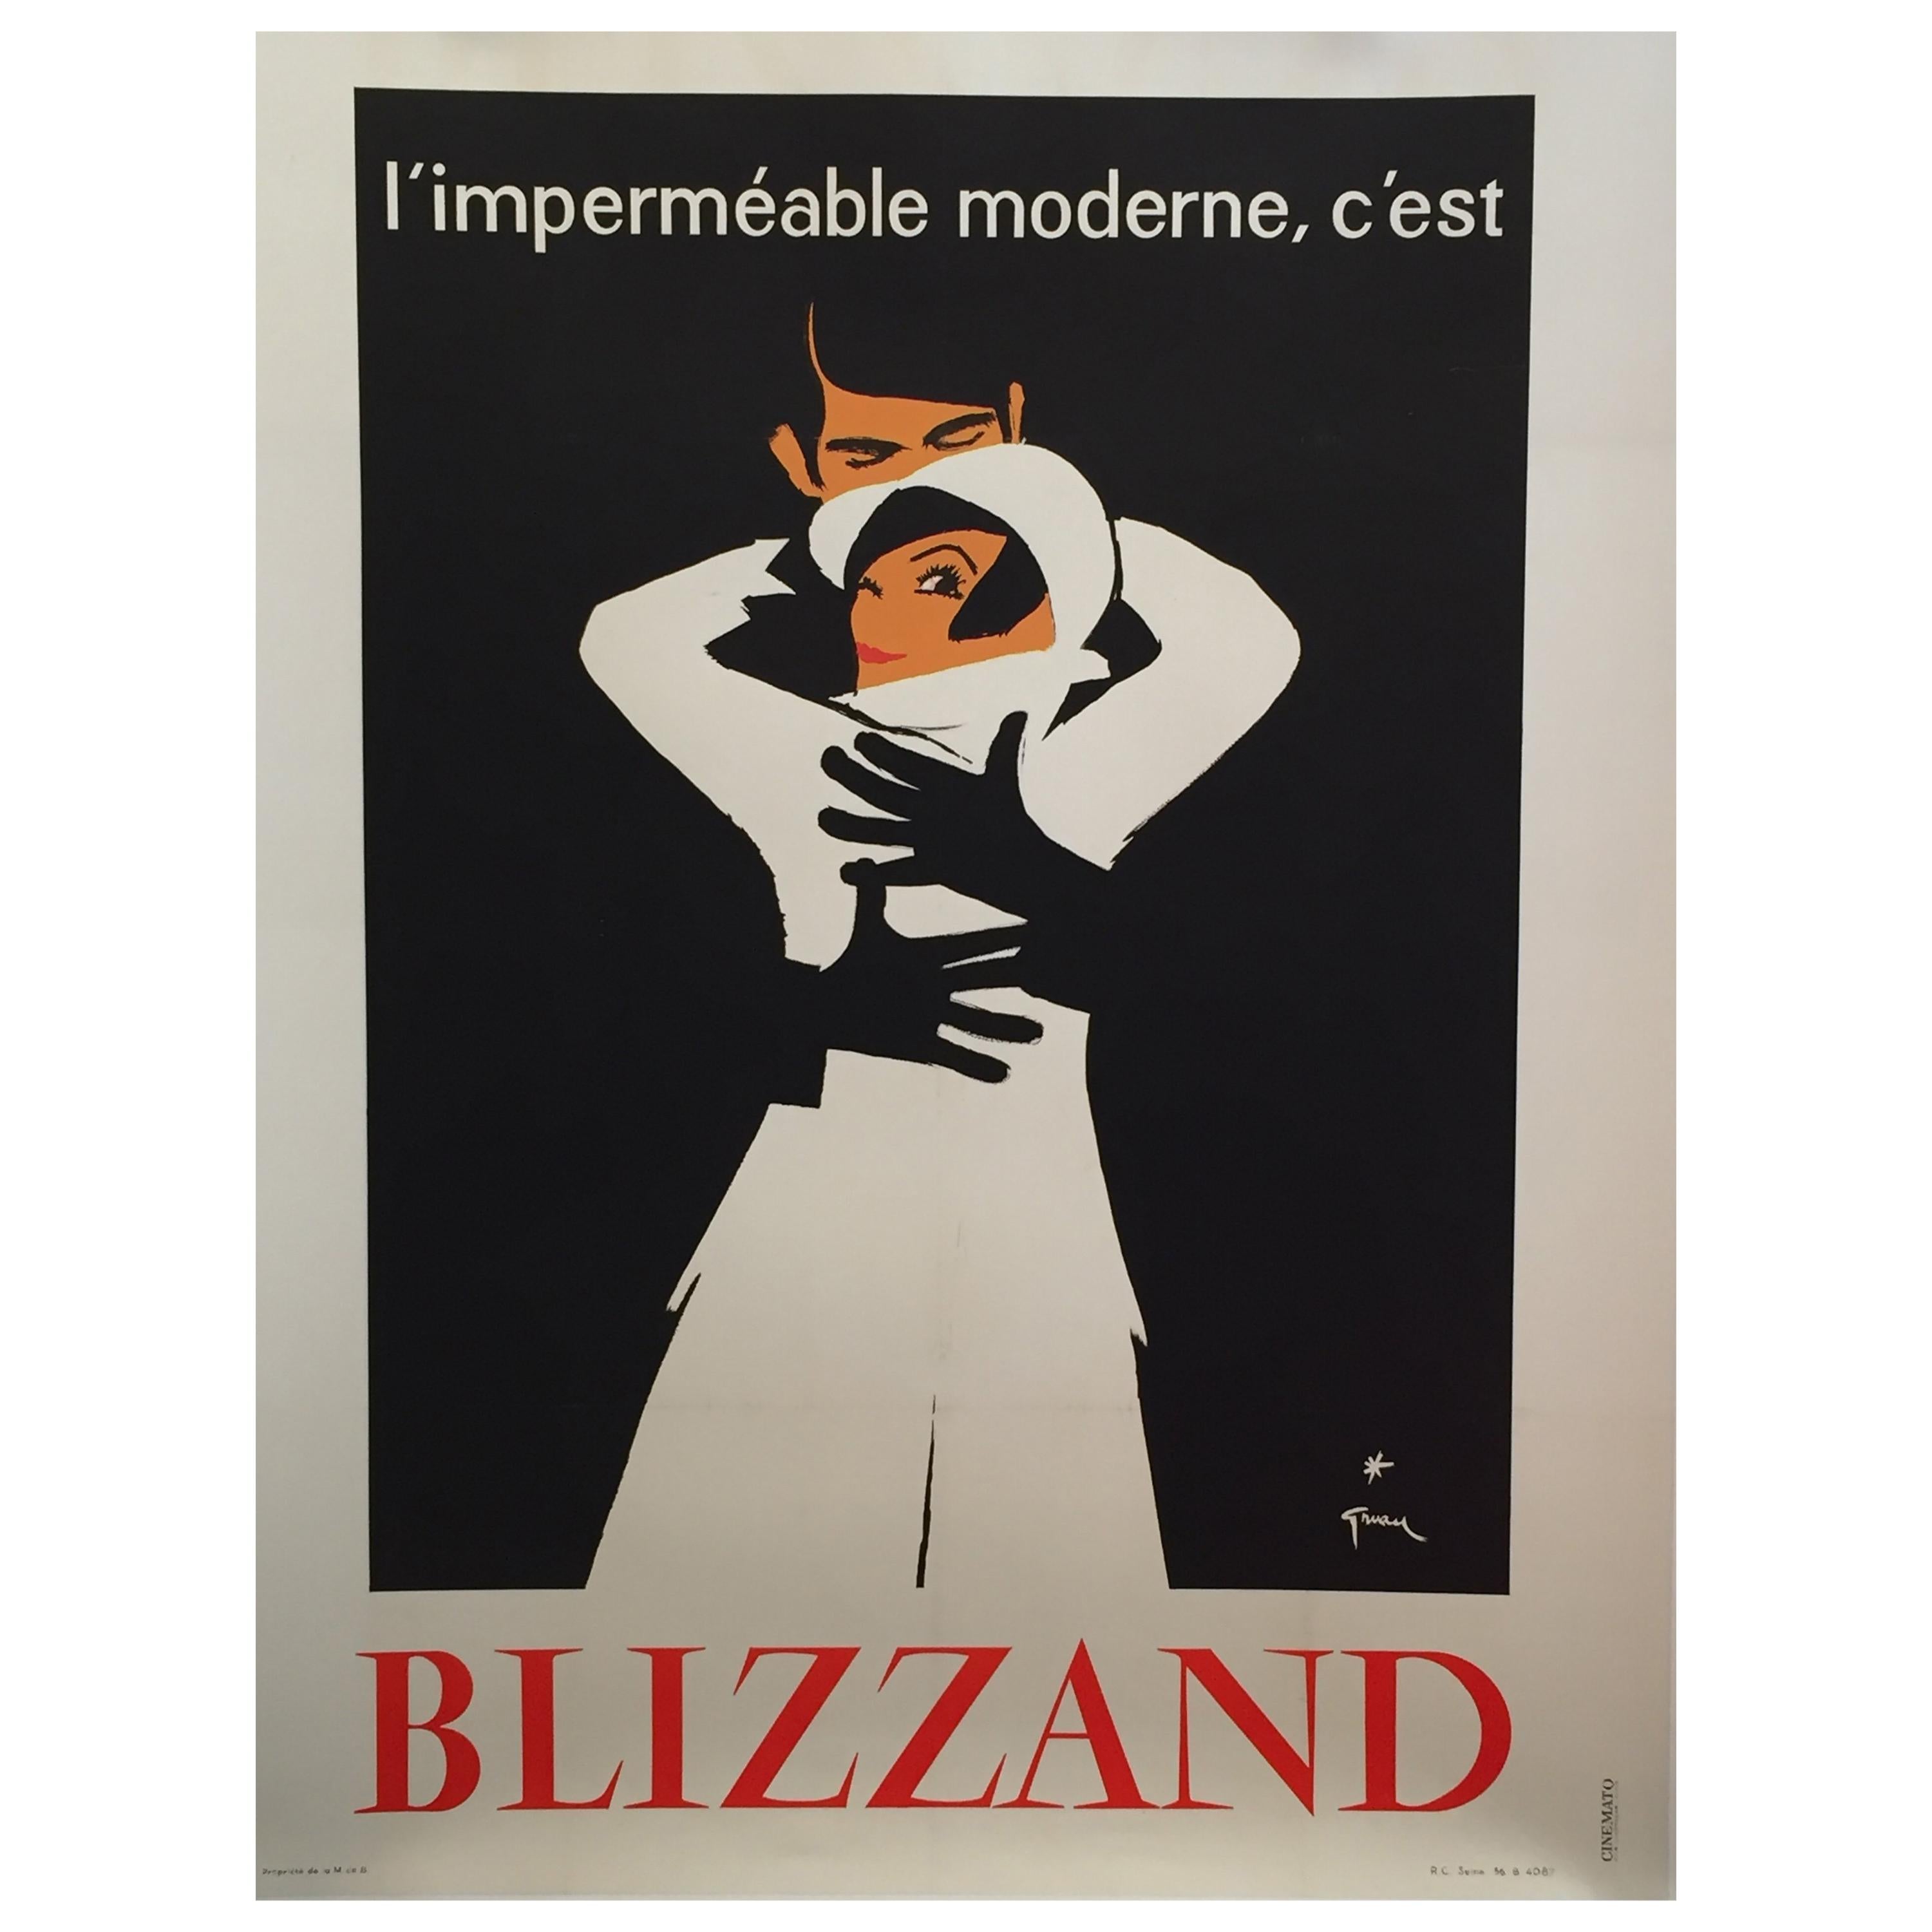 Original Vintage Fashion Poster, 'Impermeable Moderne Blizzand' by Rene Gruau